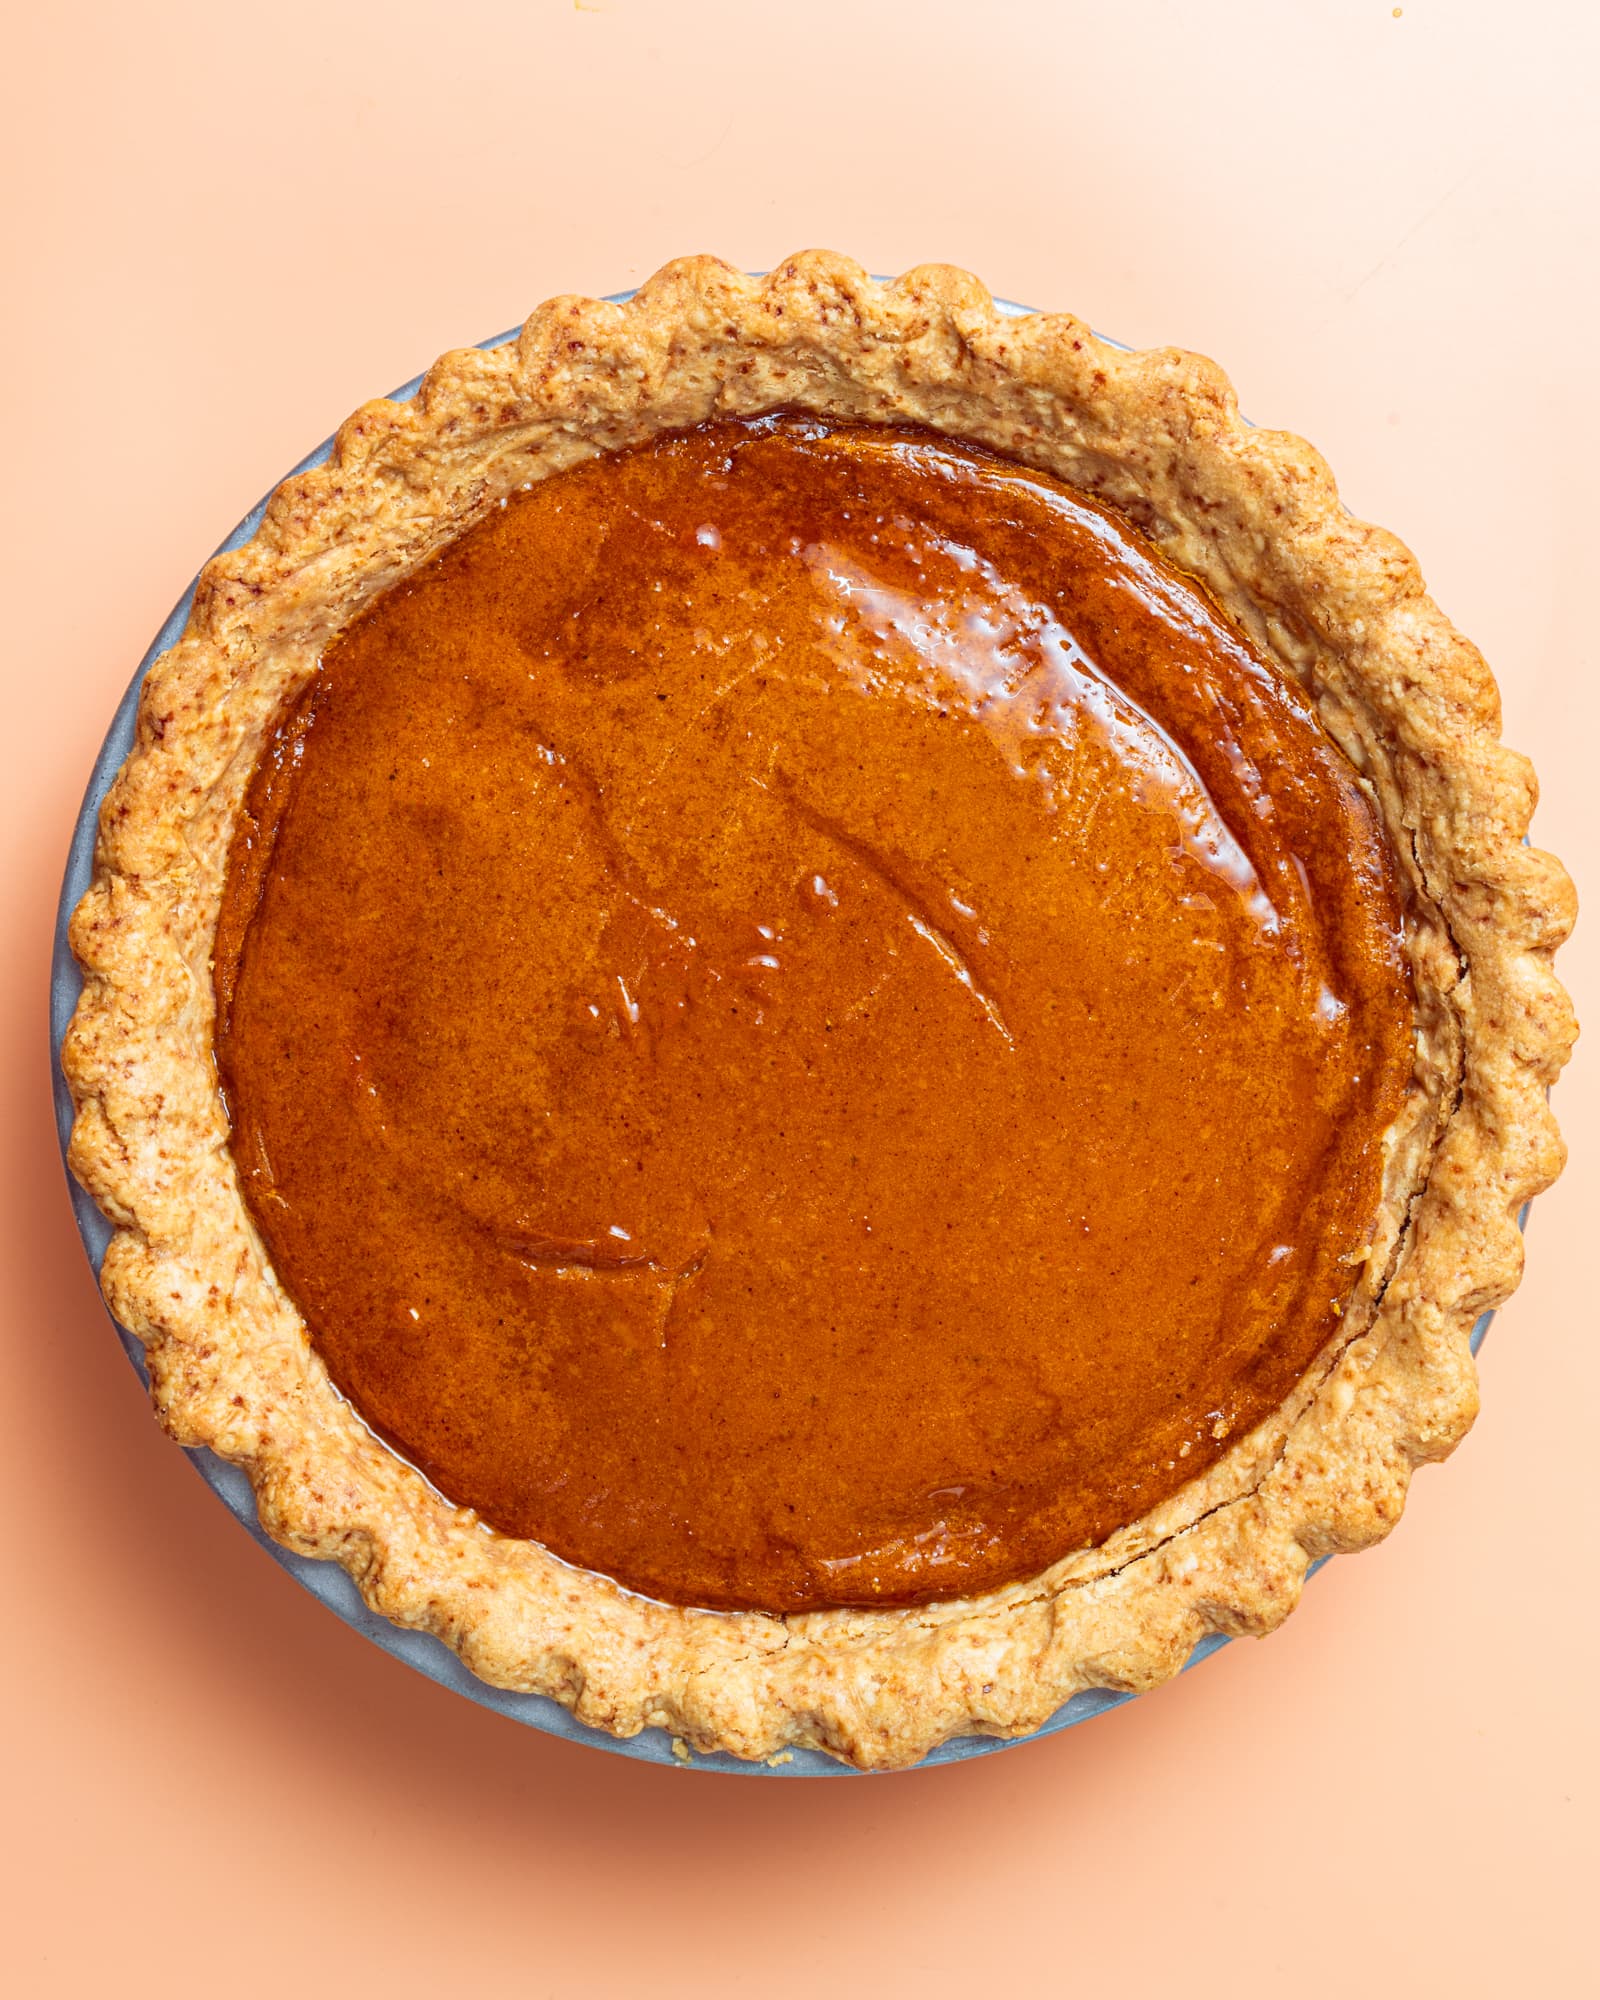 bake the vegan pumpkin pie